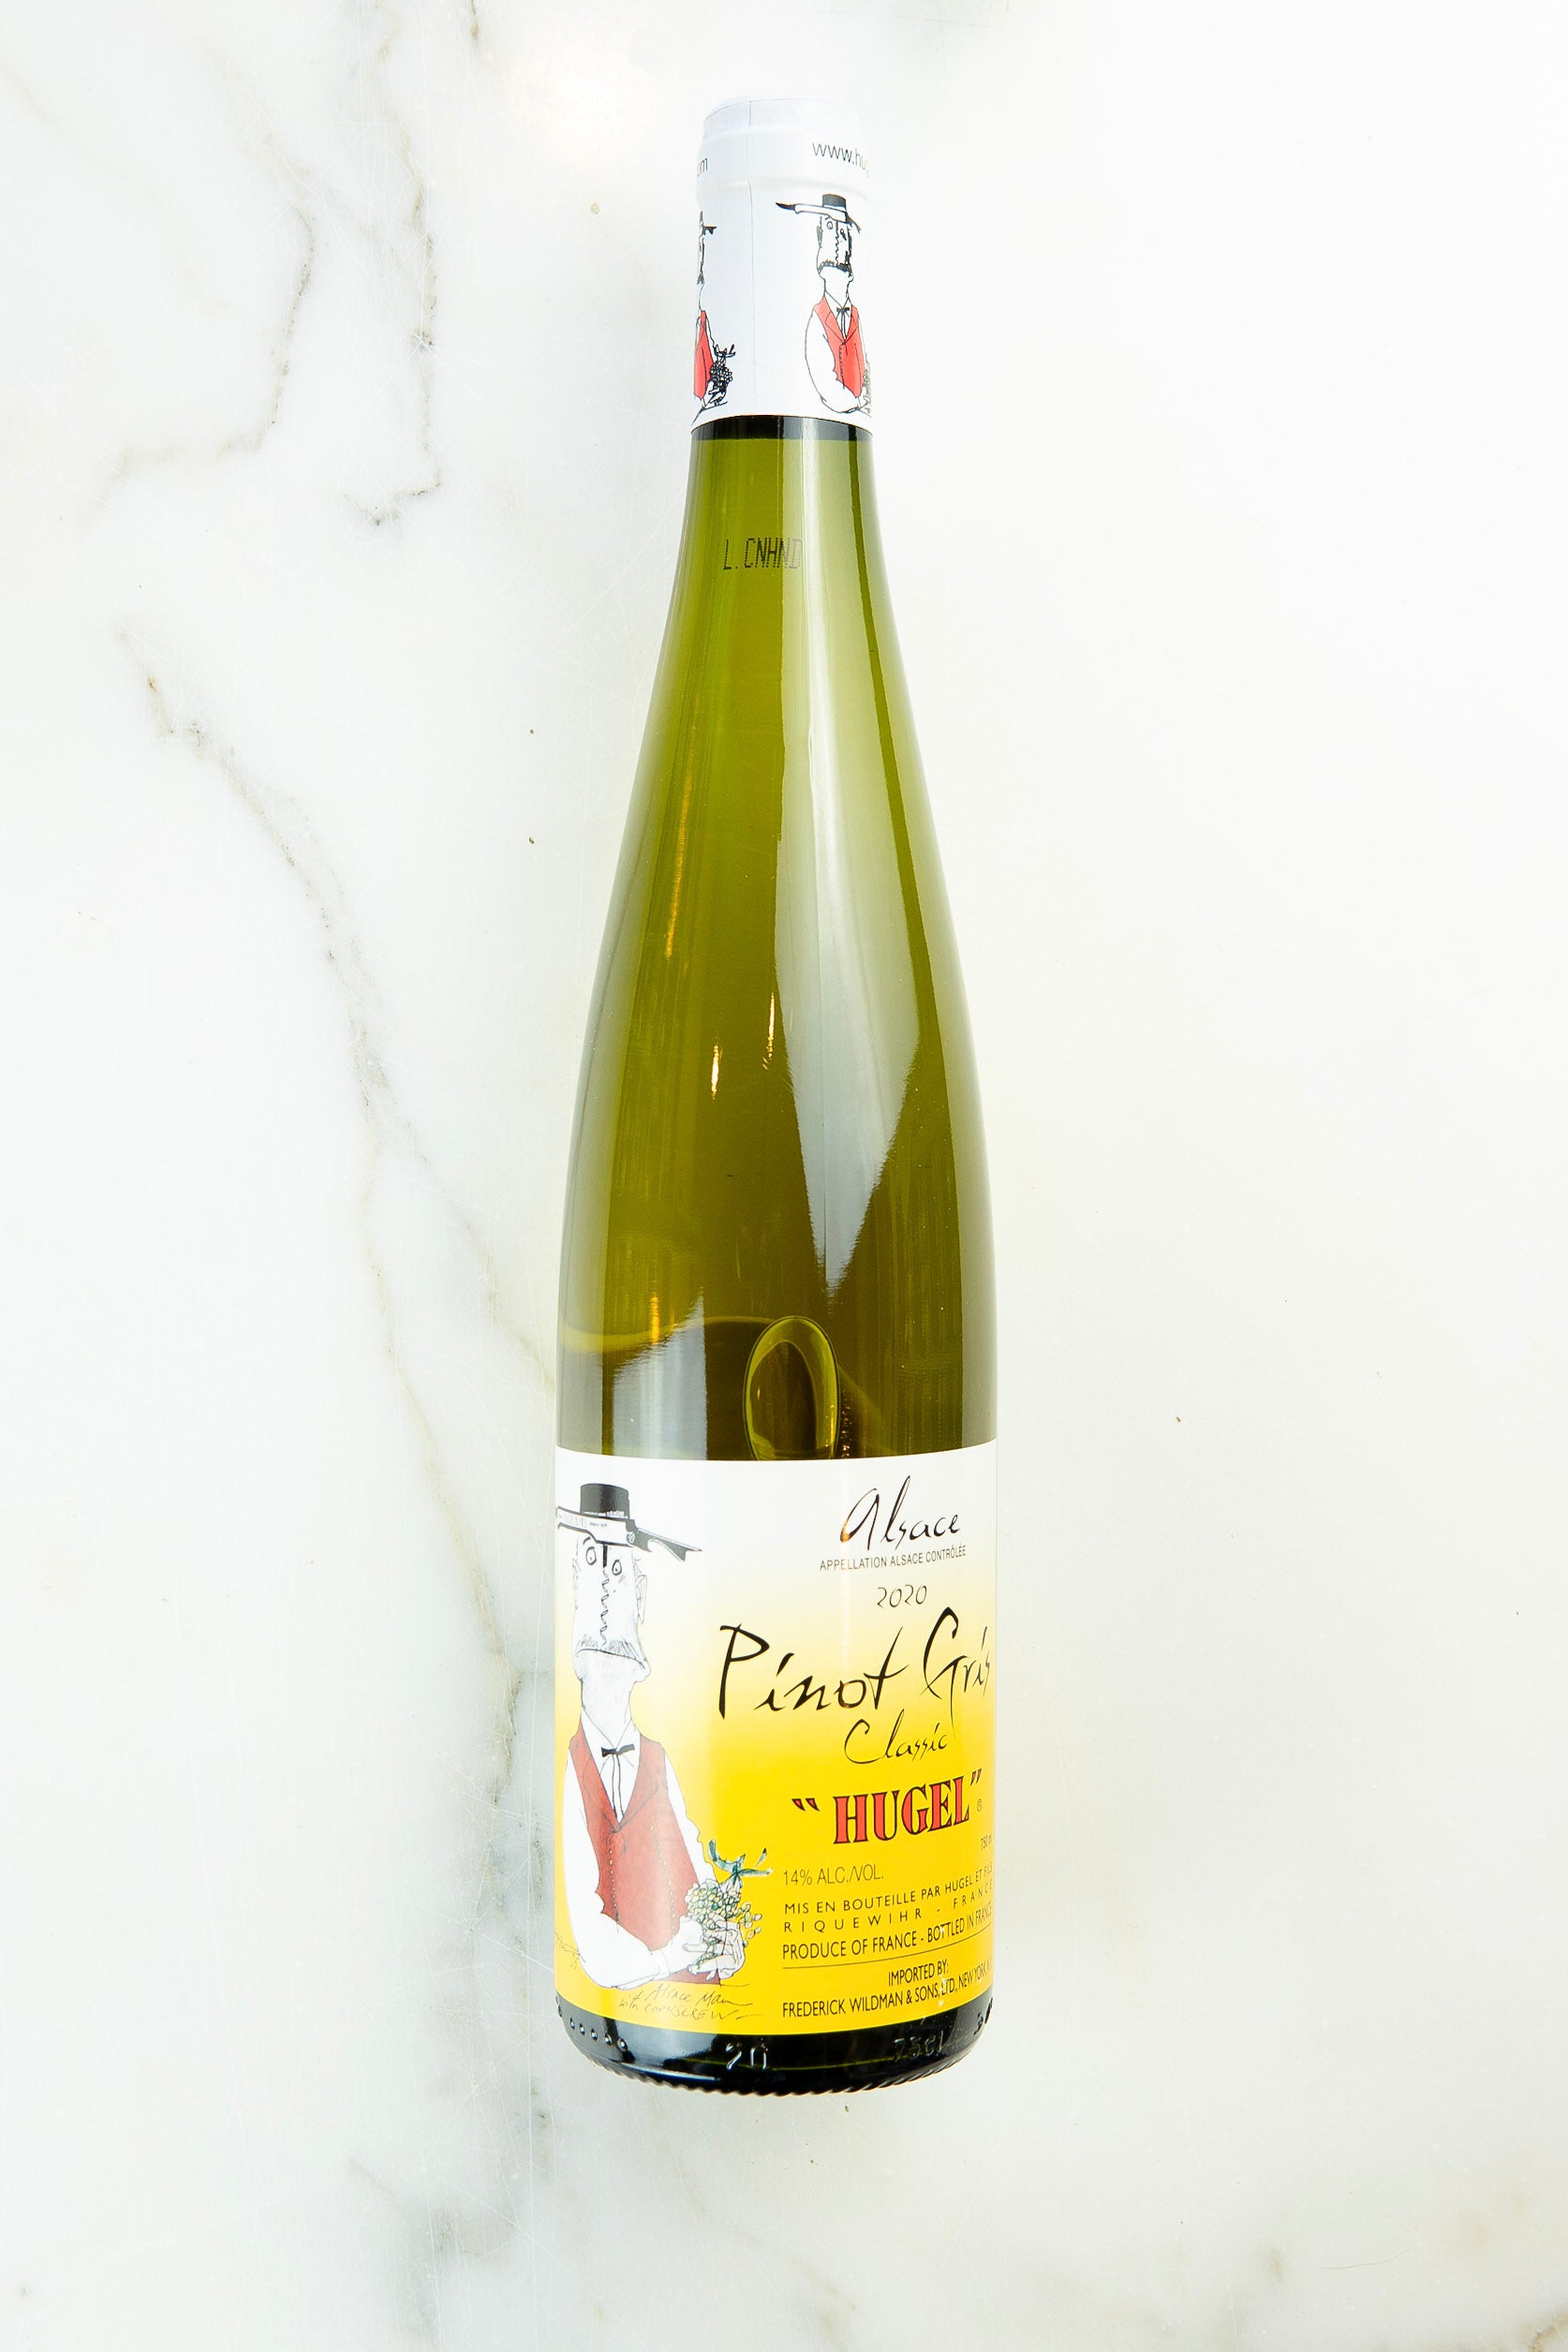 Hugel Pinot Gris Classic AOC Alsace (2020)